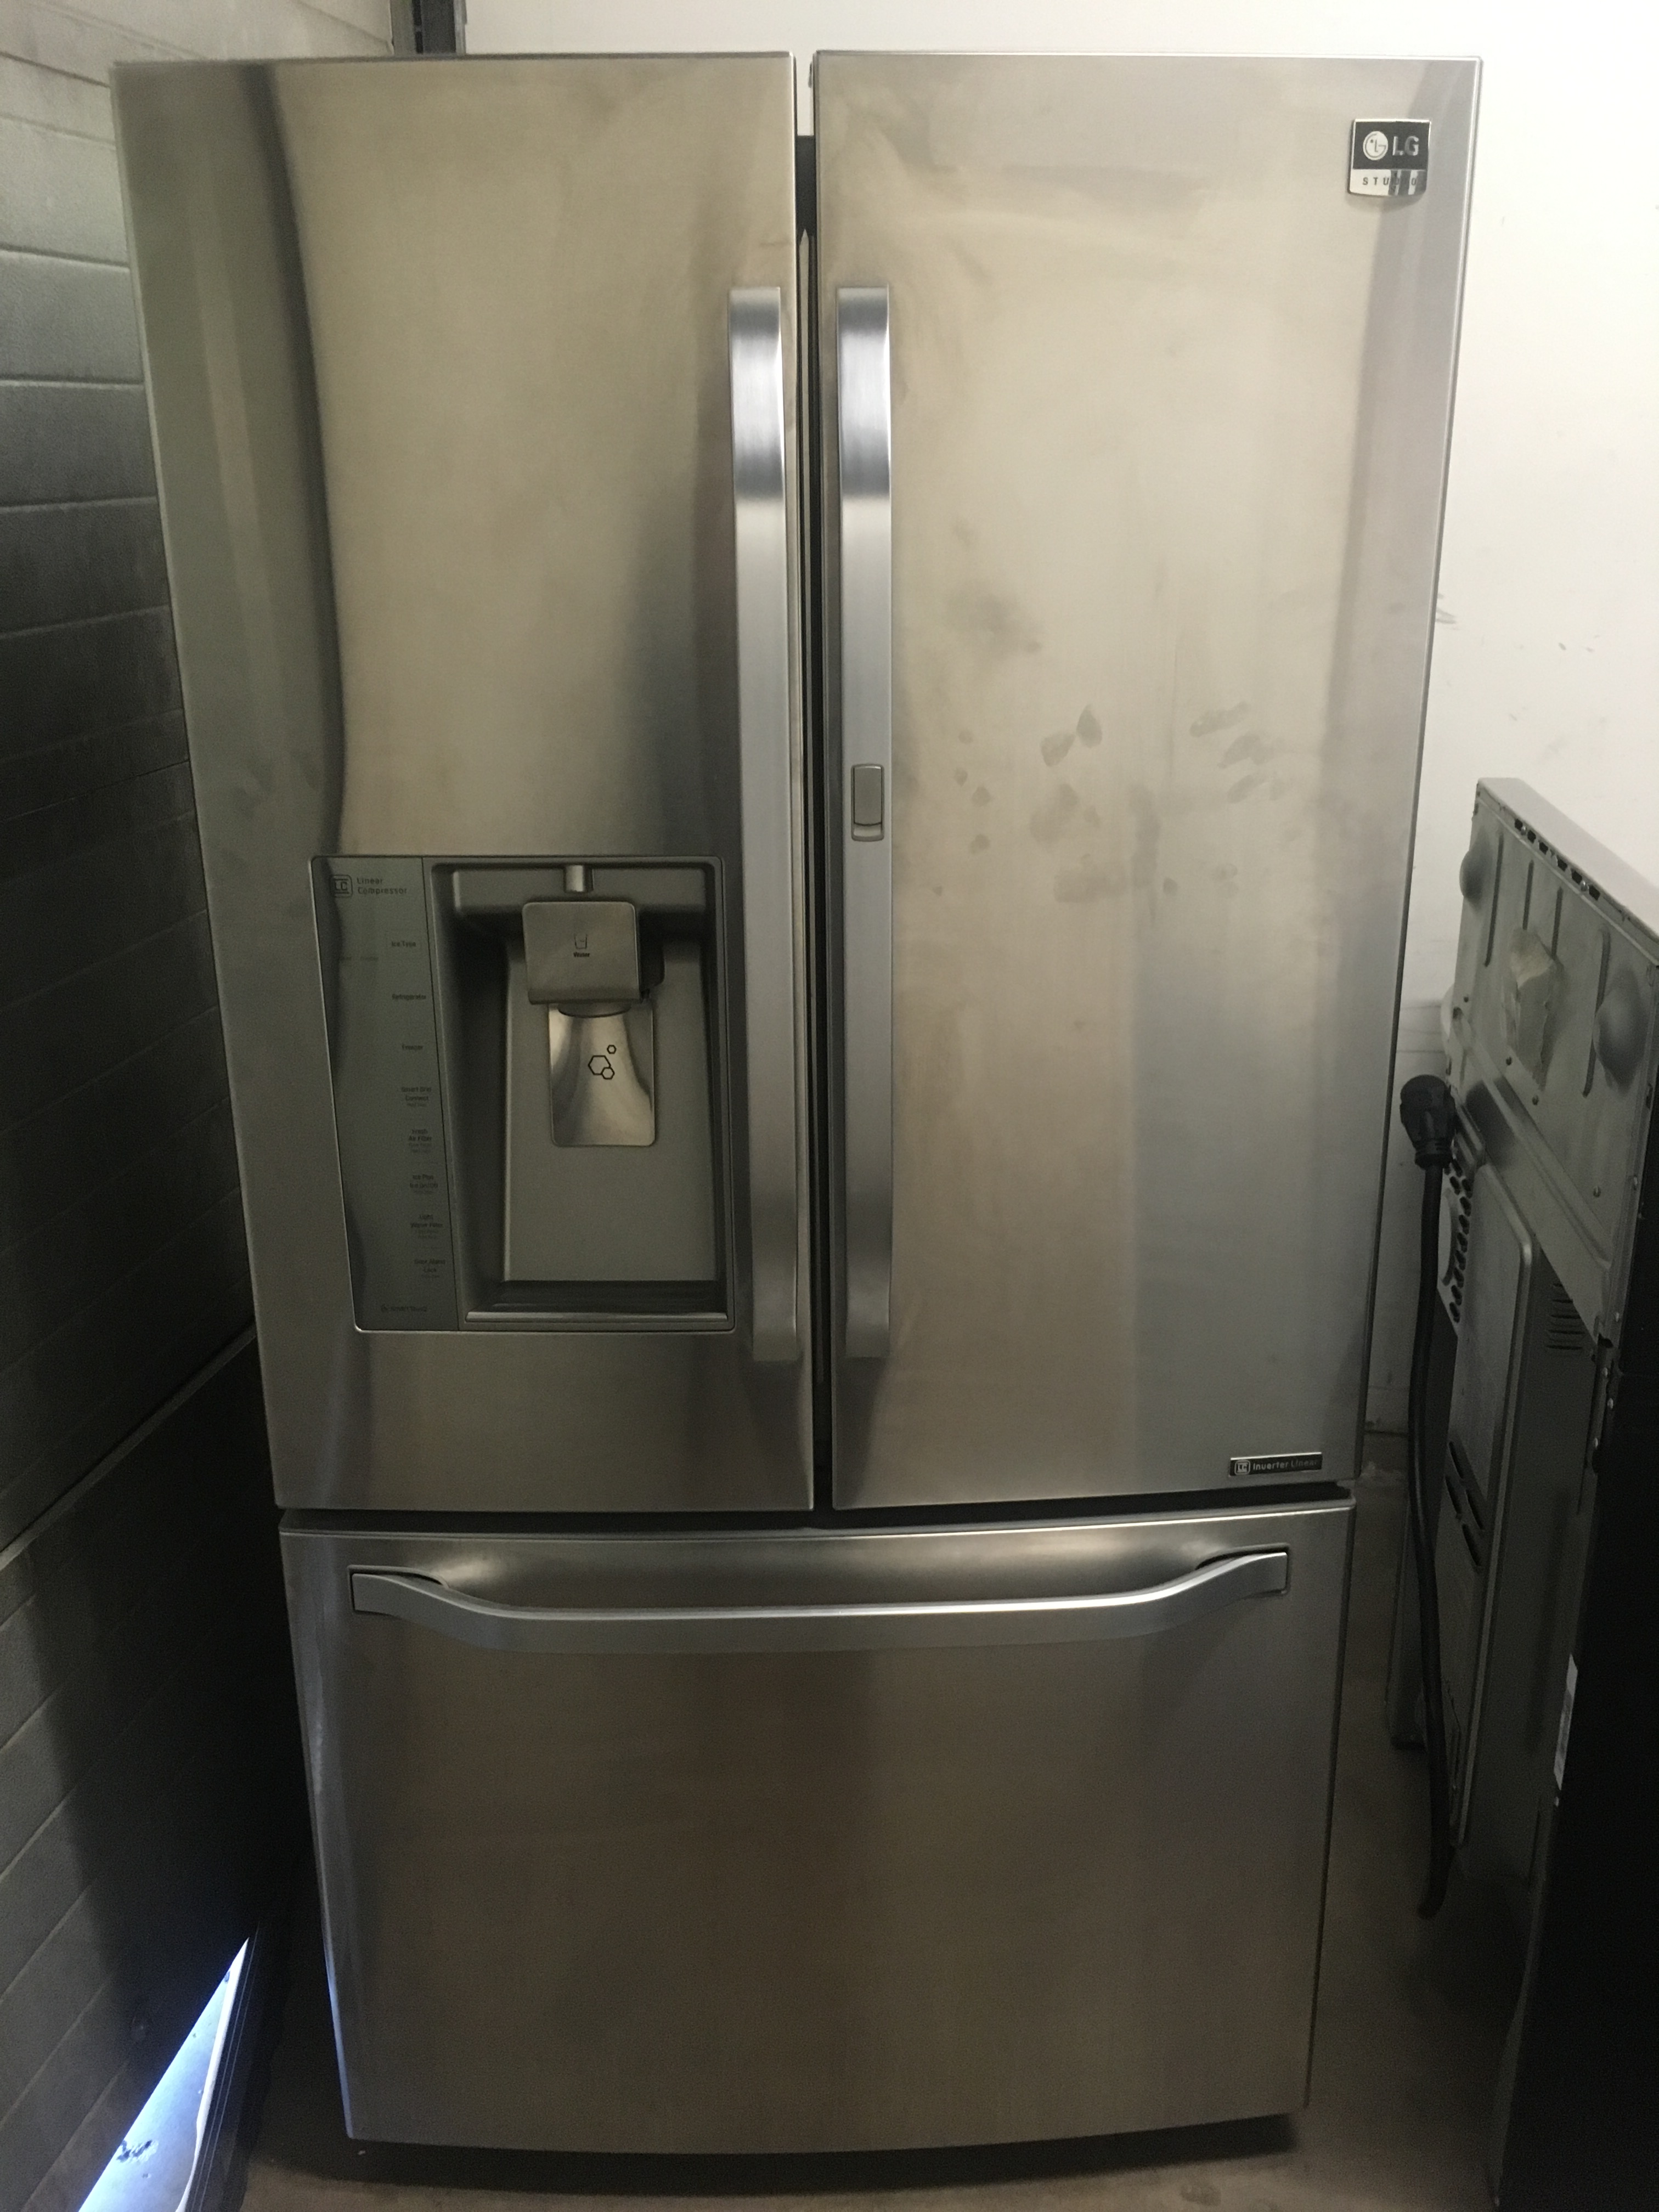 LG Stainless Refrigerator